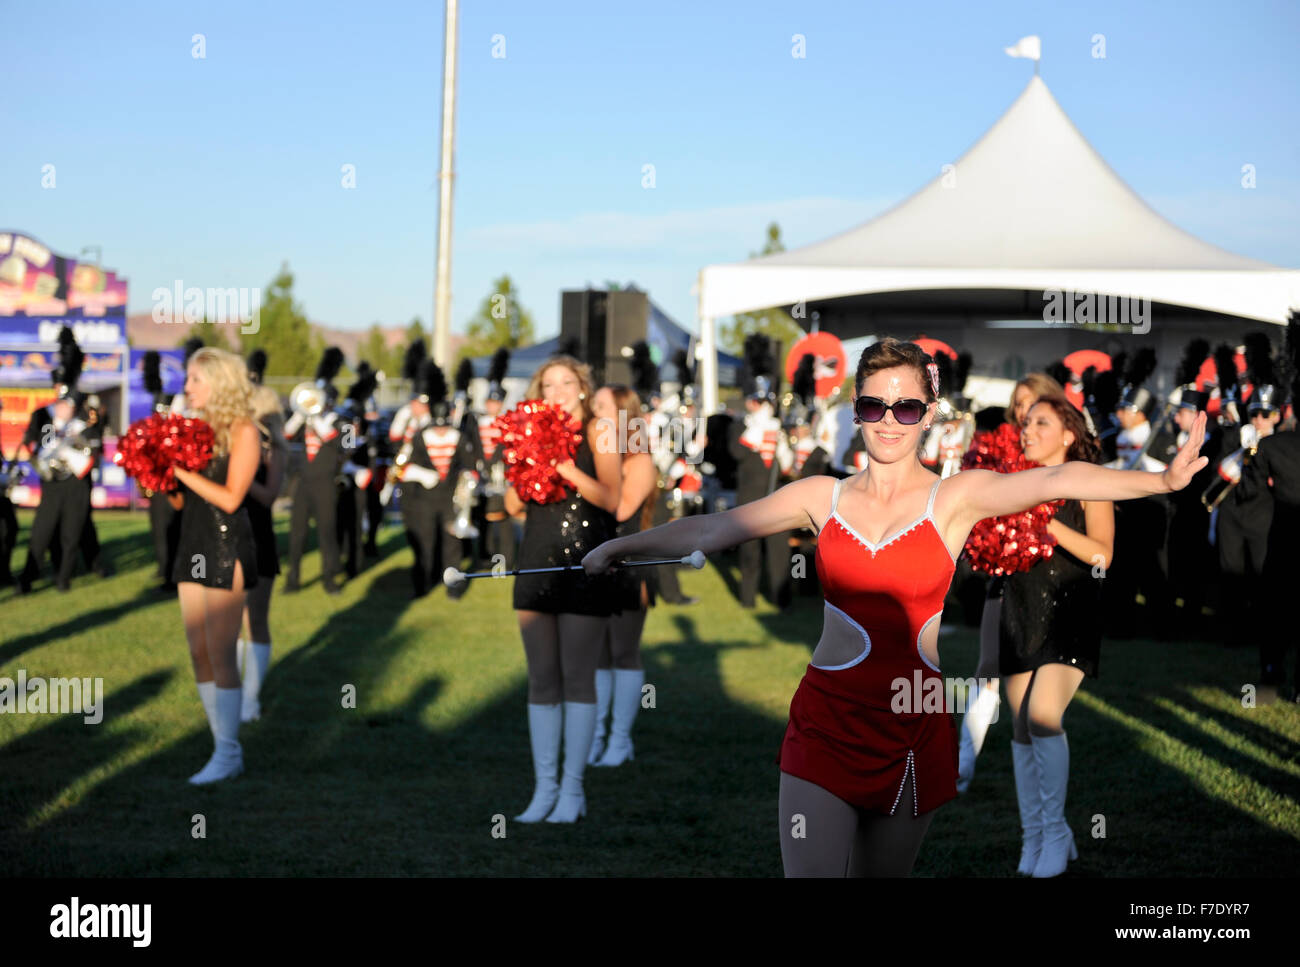 The UNLV (University of Las Vegas) Rebels Cheerleaders at a Rebels Football pre-game event Stock Photo